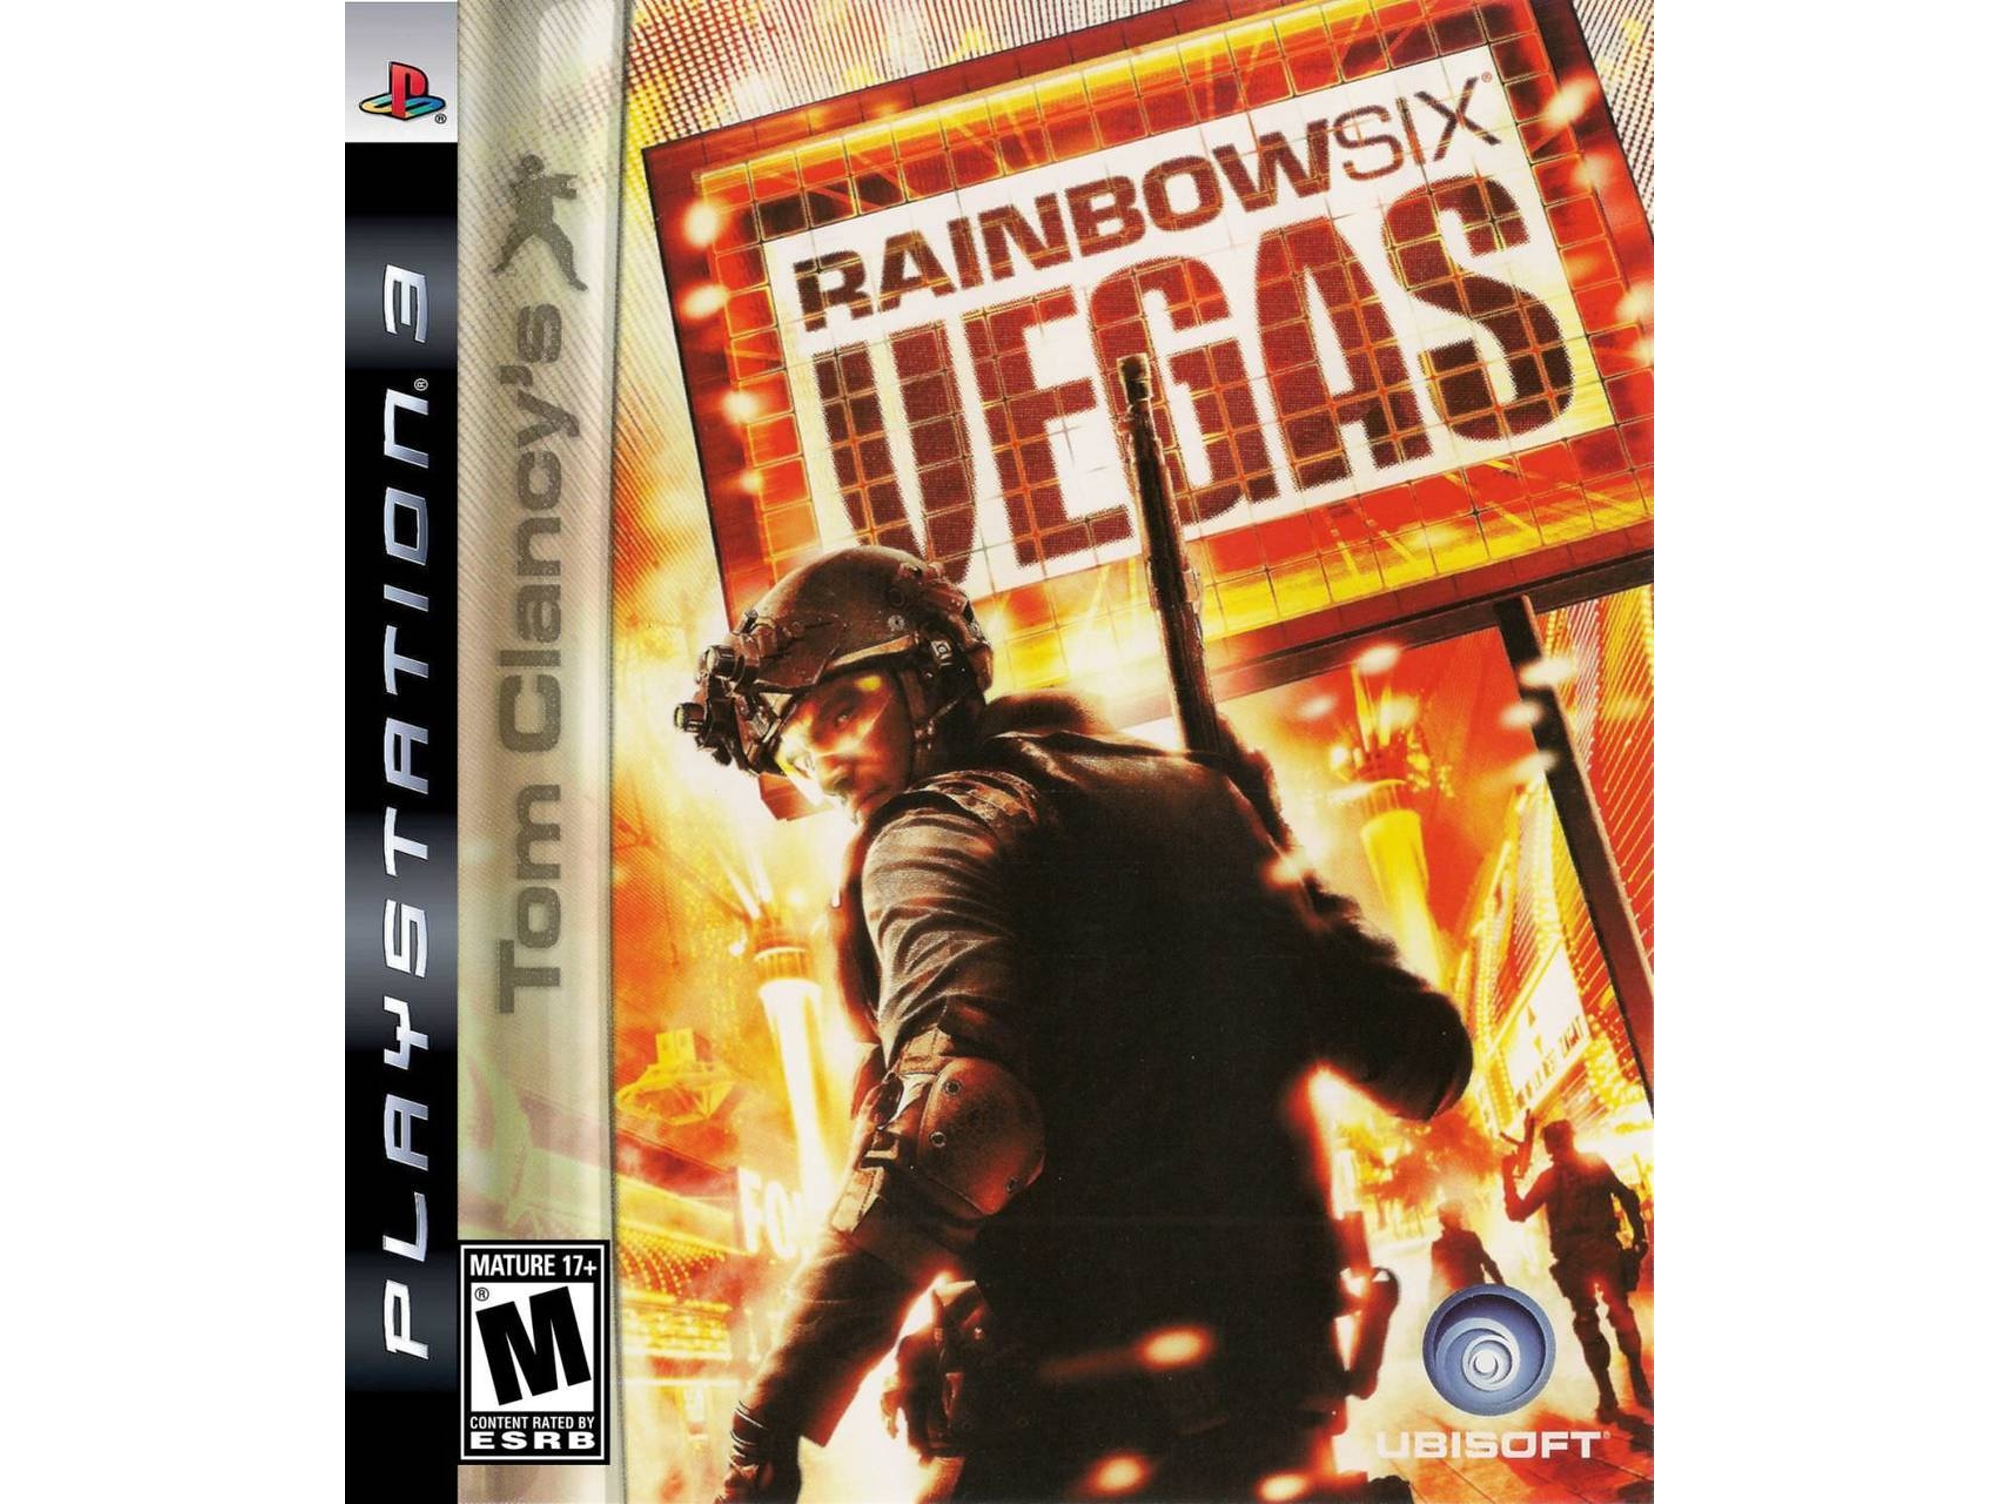 Picasso Desgracia Verter Juego PS3 Rainbow Six Vegas